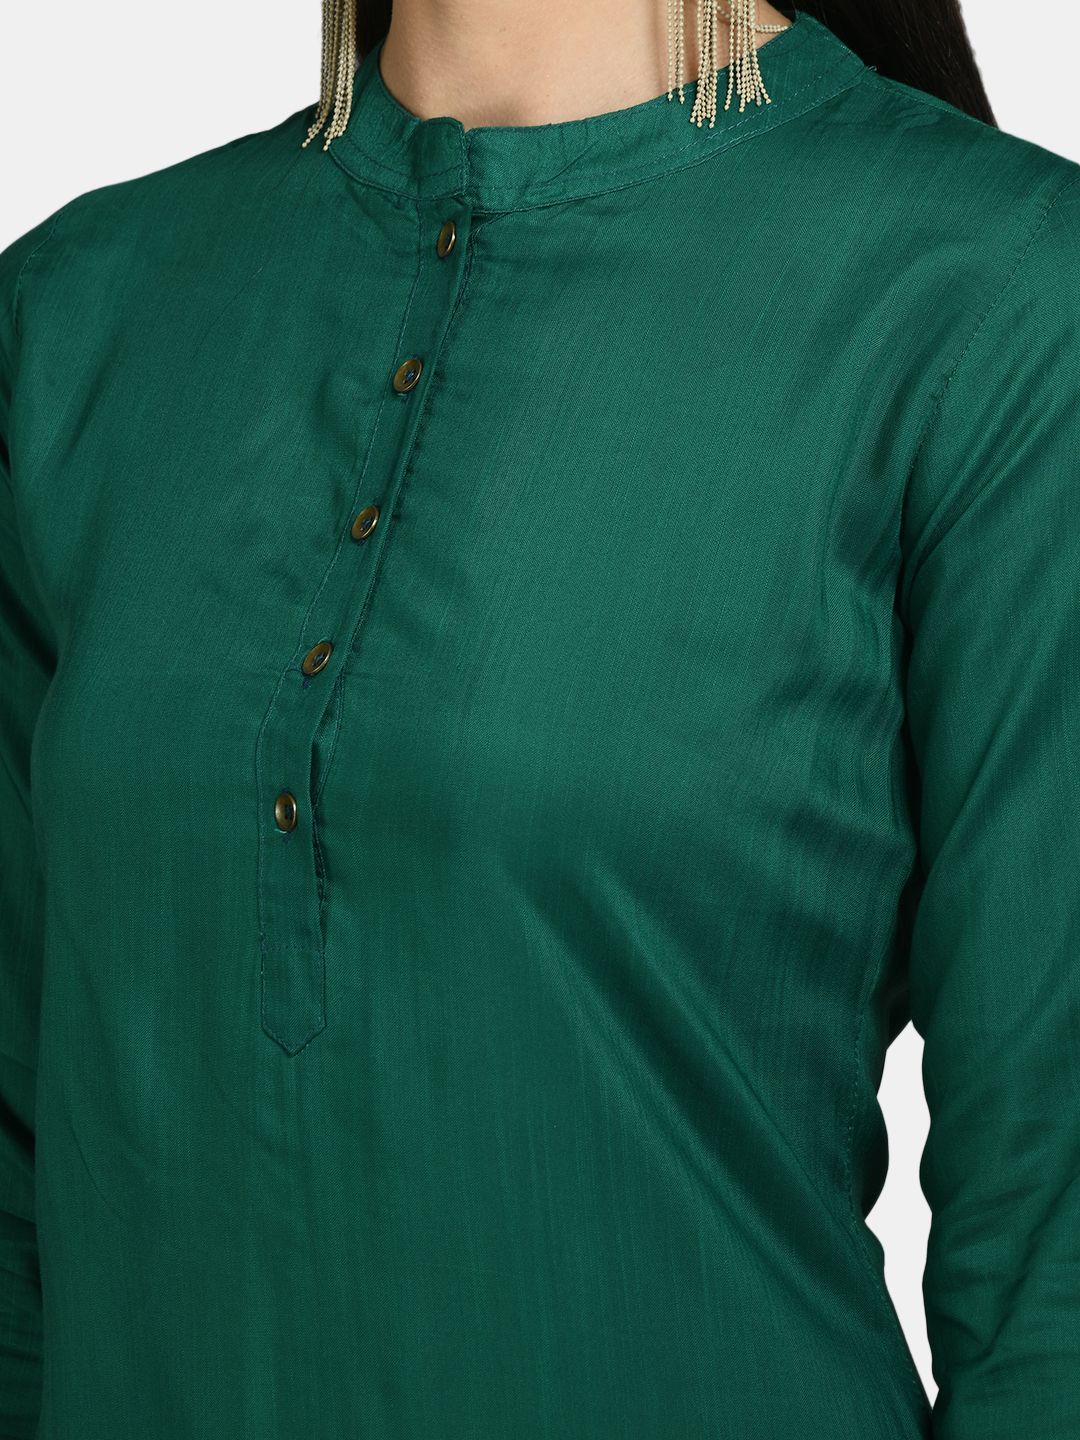 Women's Green Silk Solid 3/4 Sleeve Round Neck Casual Kurta Pant Dupatta Set - Myshka